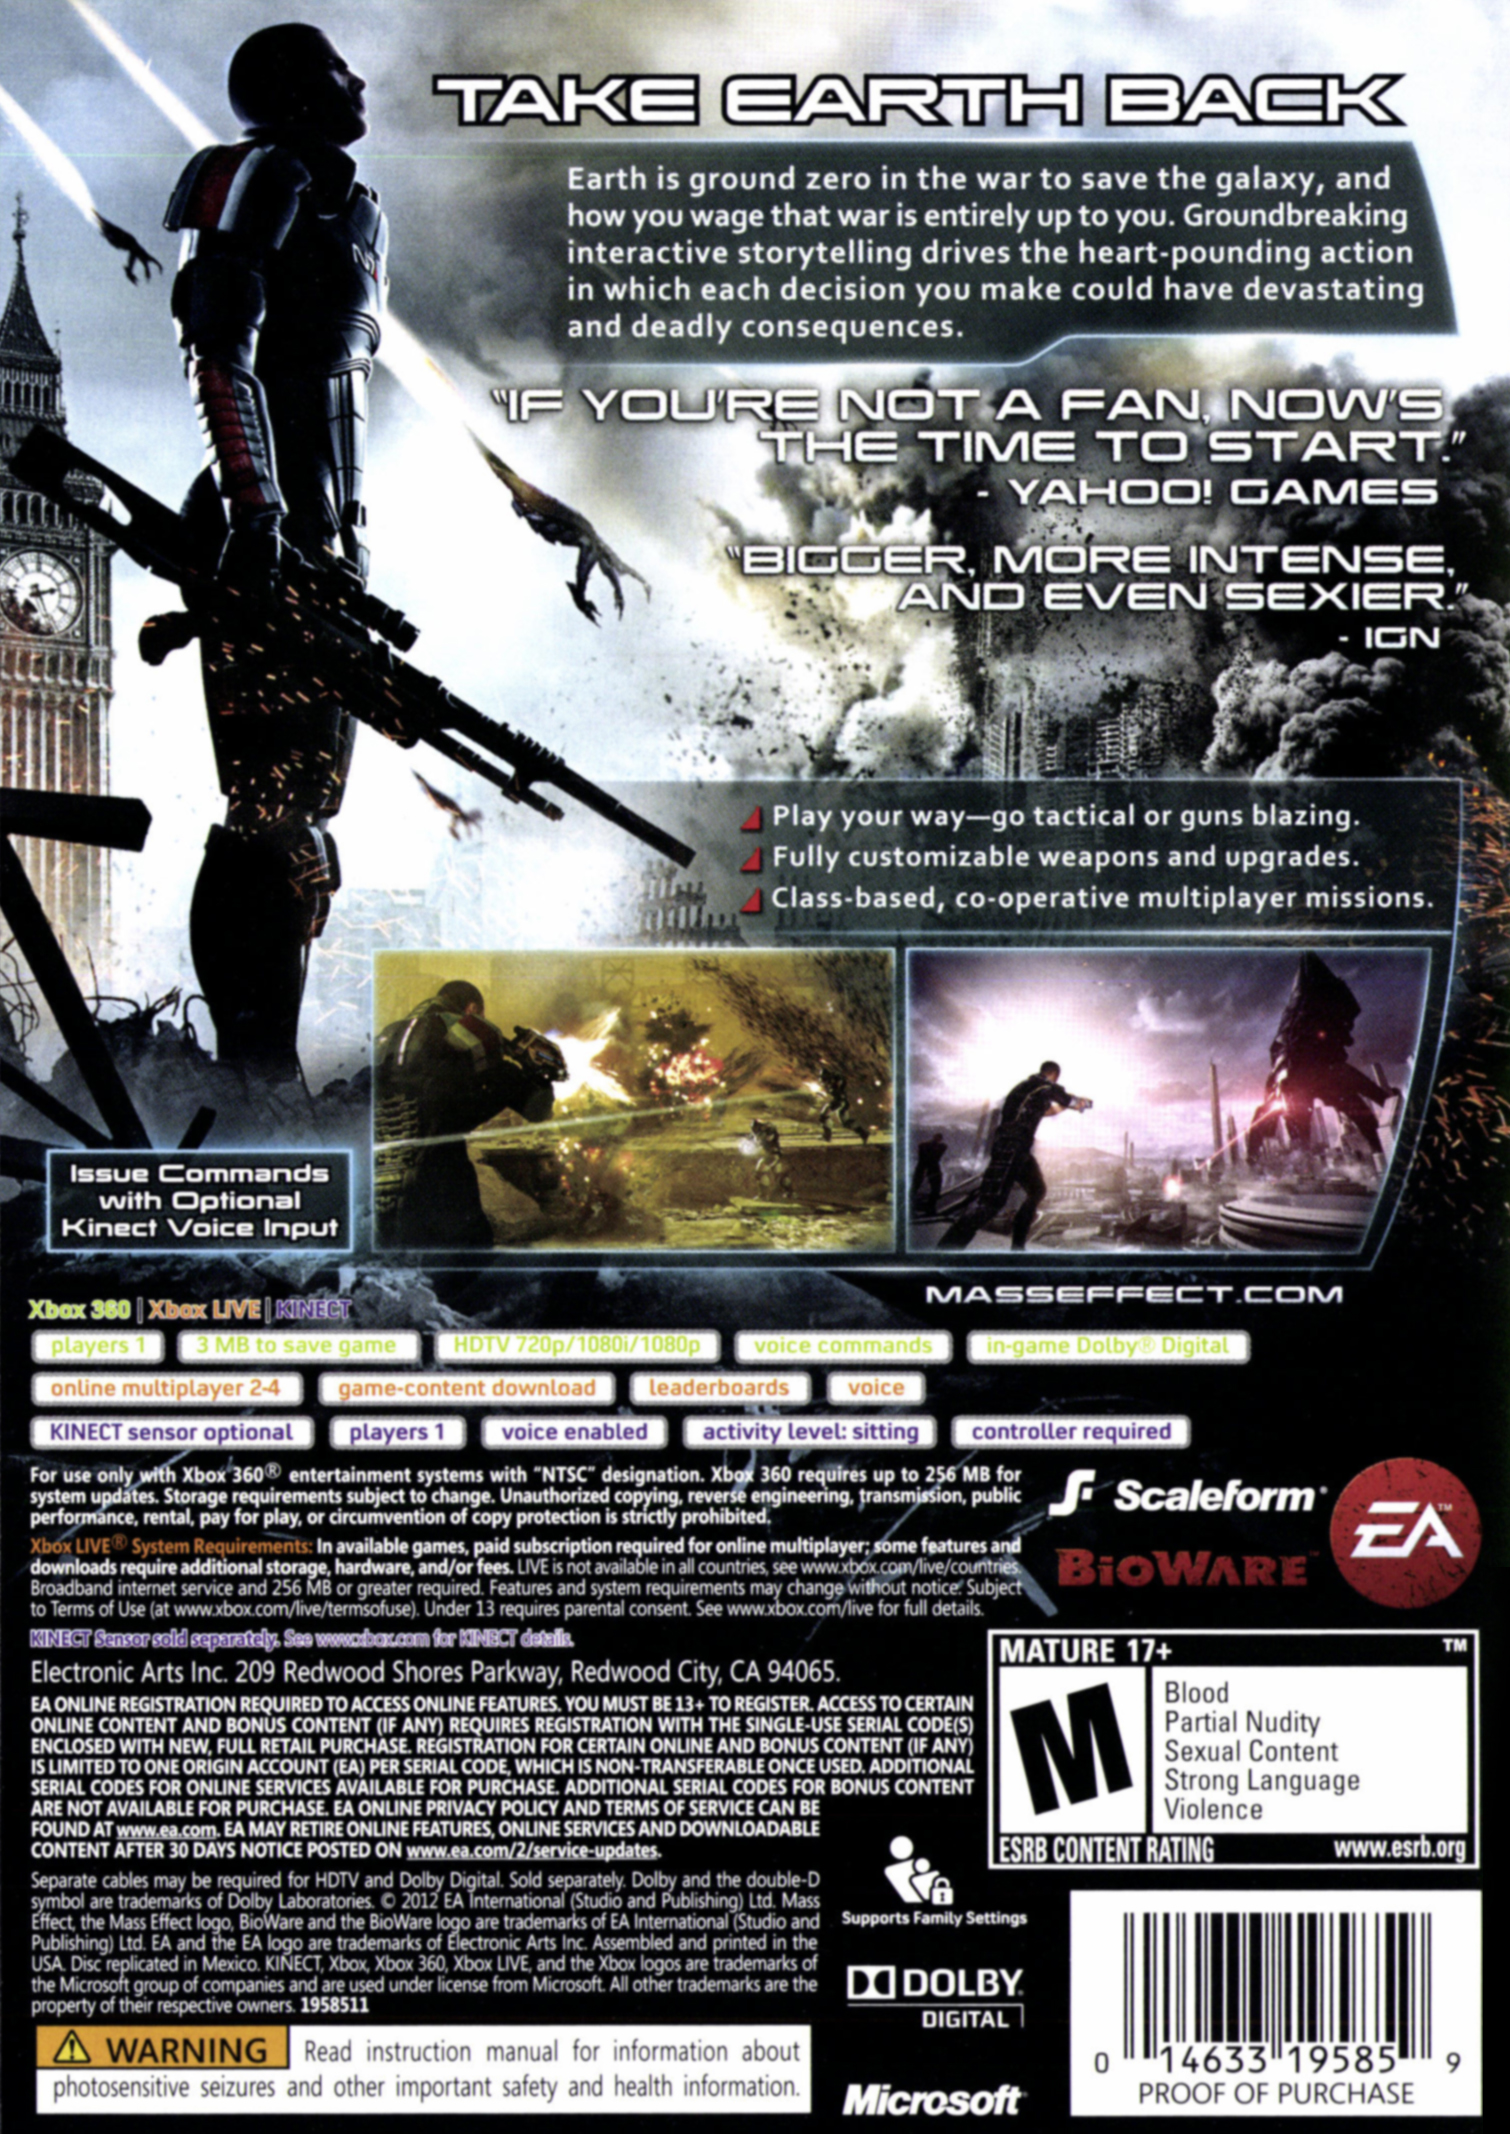 Mass Effect 3, Electronic Arts - Xbox 360 - image 2 of 22